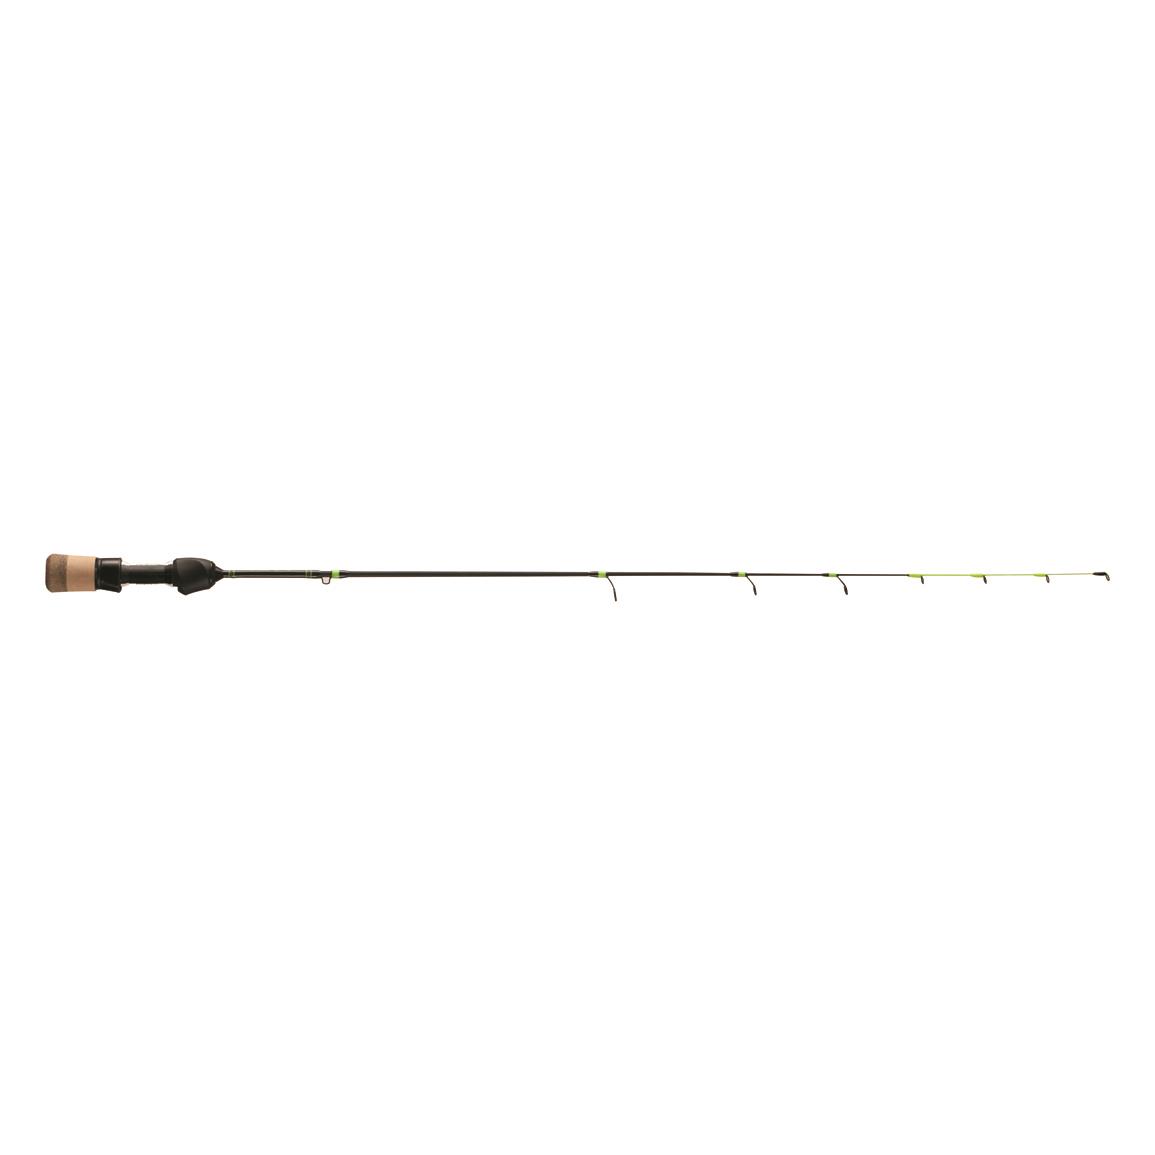 St. Croix Skandic Ice Fishing Spinning Rod, 36, Medium Heavy Power -  728949, Ice Fishing Rods at Sportsman's Guide